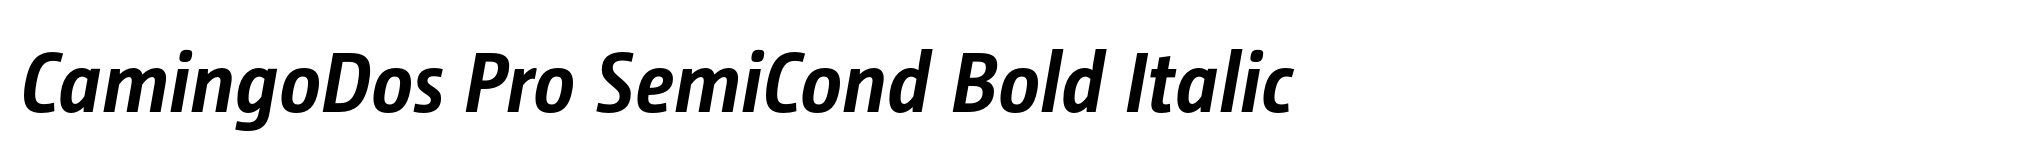 CamingoDos Pro SemiCond Bold Italic image